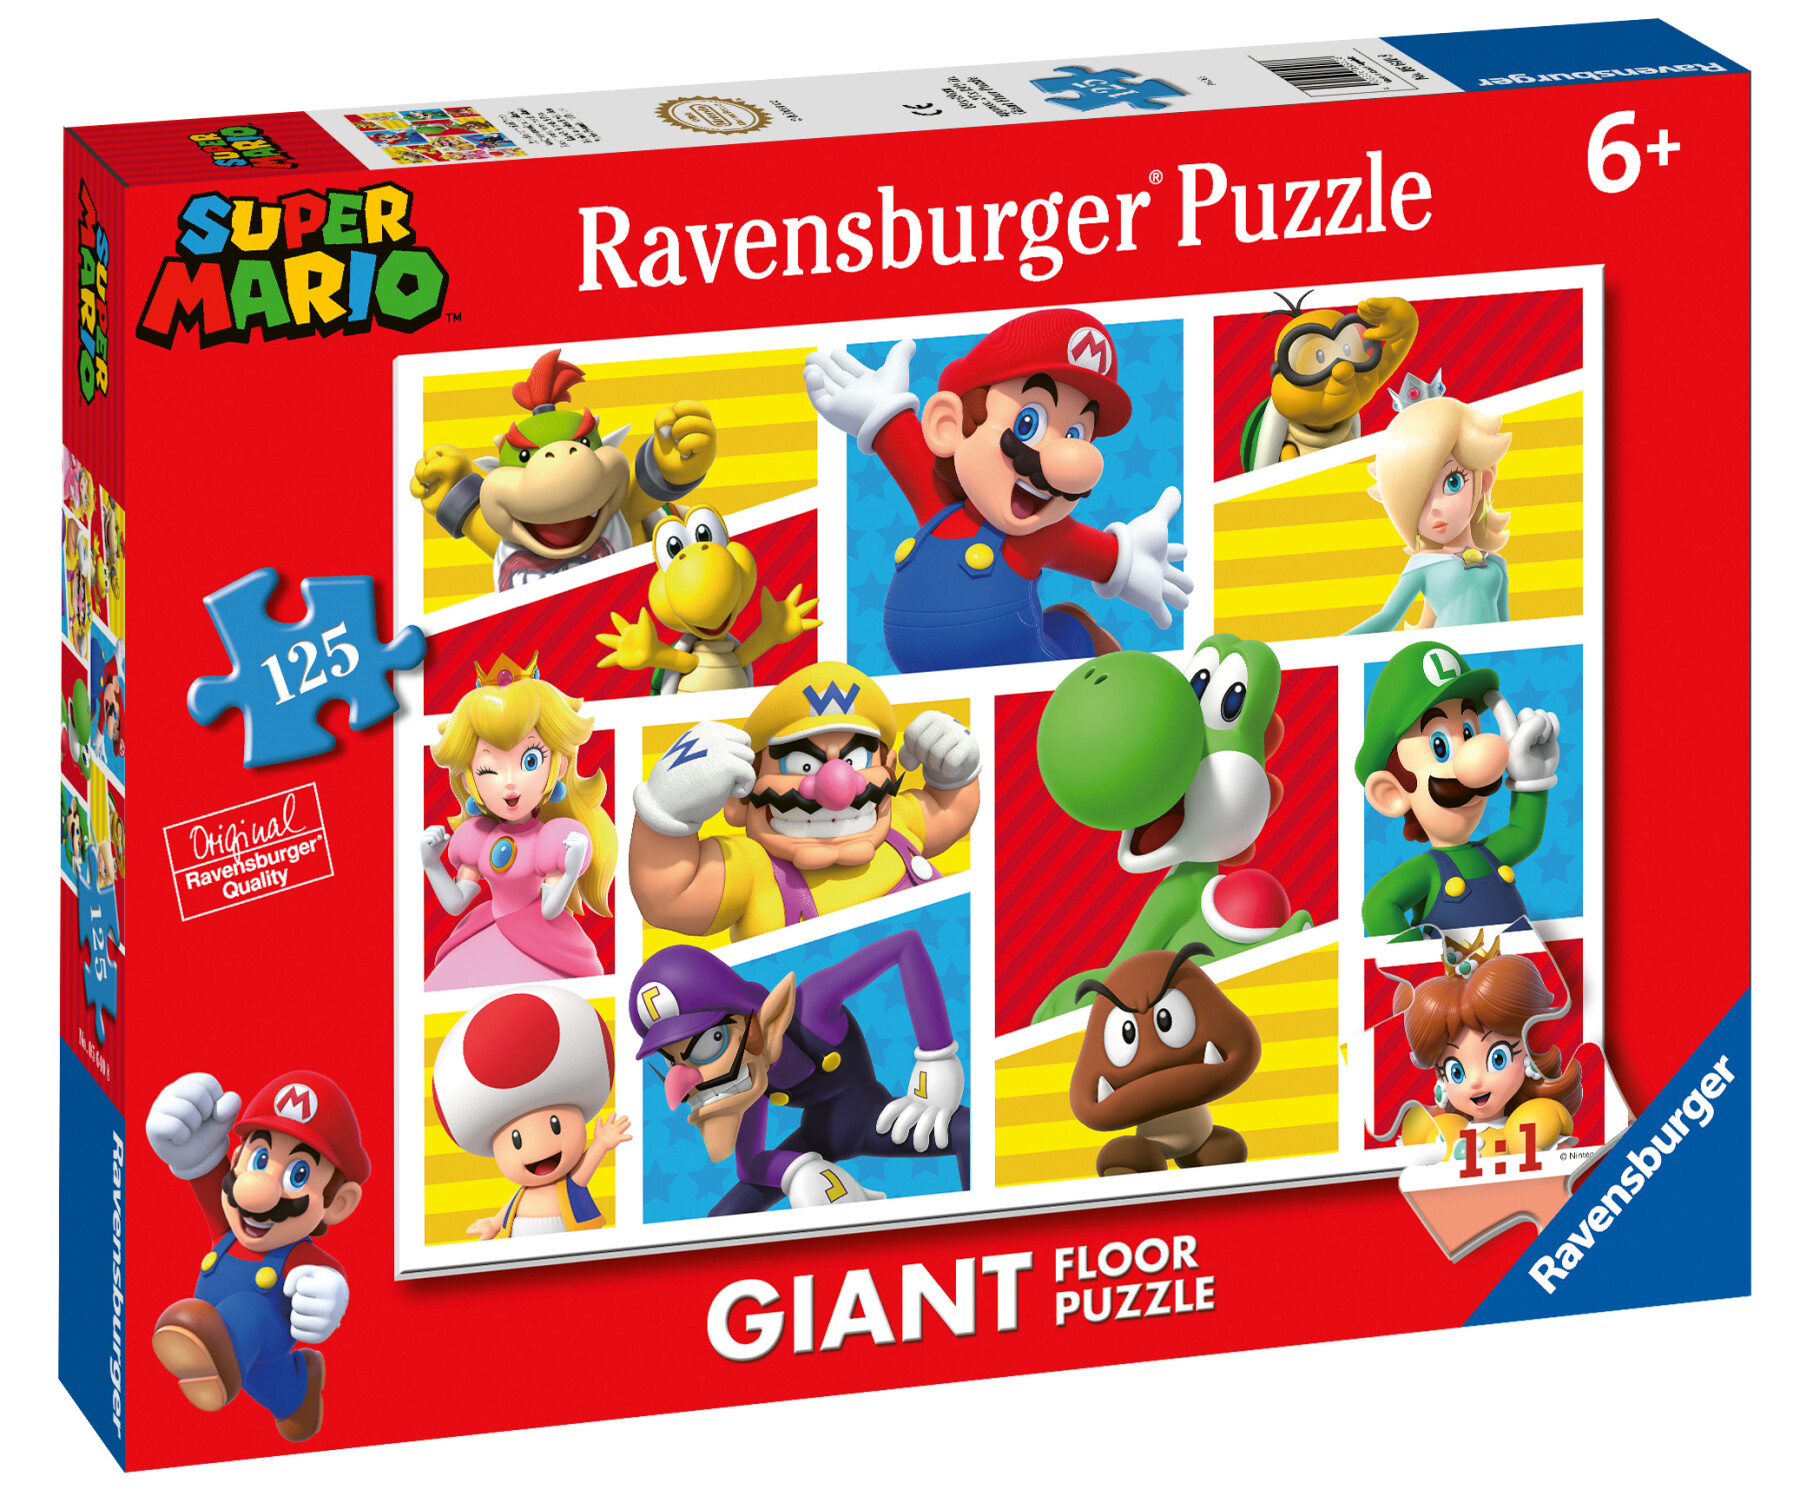 Ravensburger - puzzle super mario, collezione 125 giant pavimento, 125 pezzi, età raccomandata 6+ anni - RAVENSBURGER, Super Mario